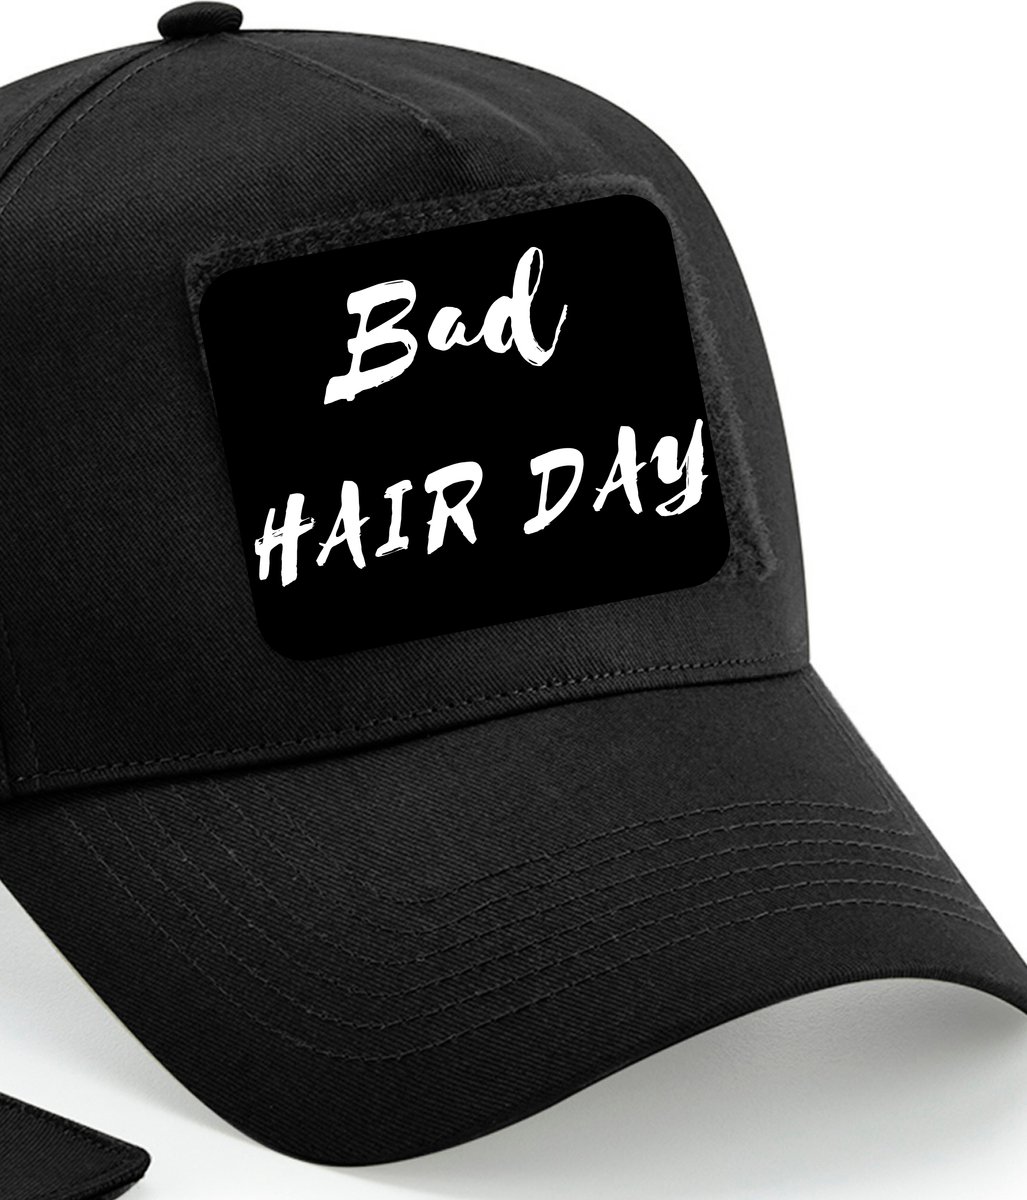 beechfield baseball cap - Leuke tekst op cap - baseball cap - pet met tekst - Bad hair day